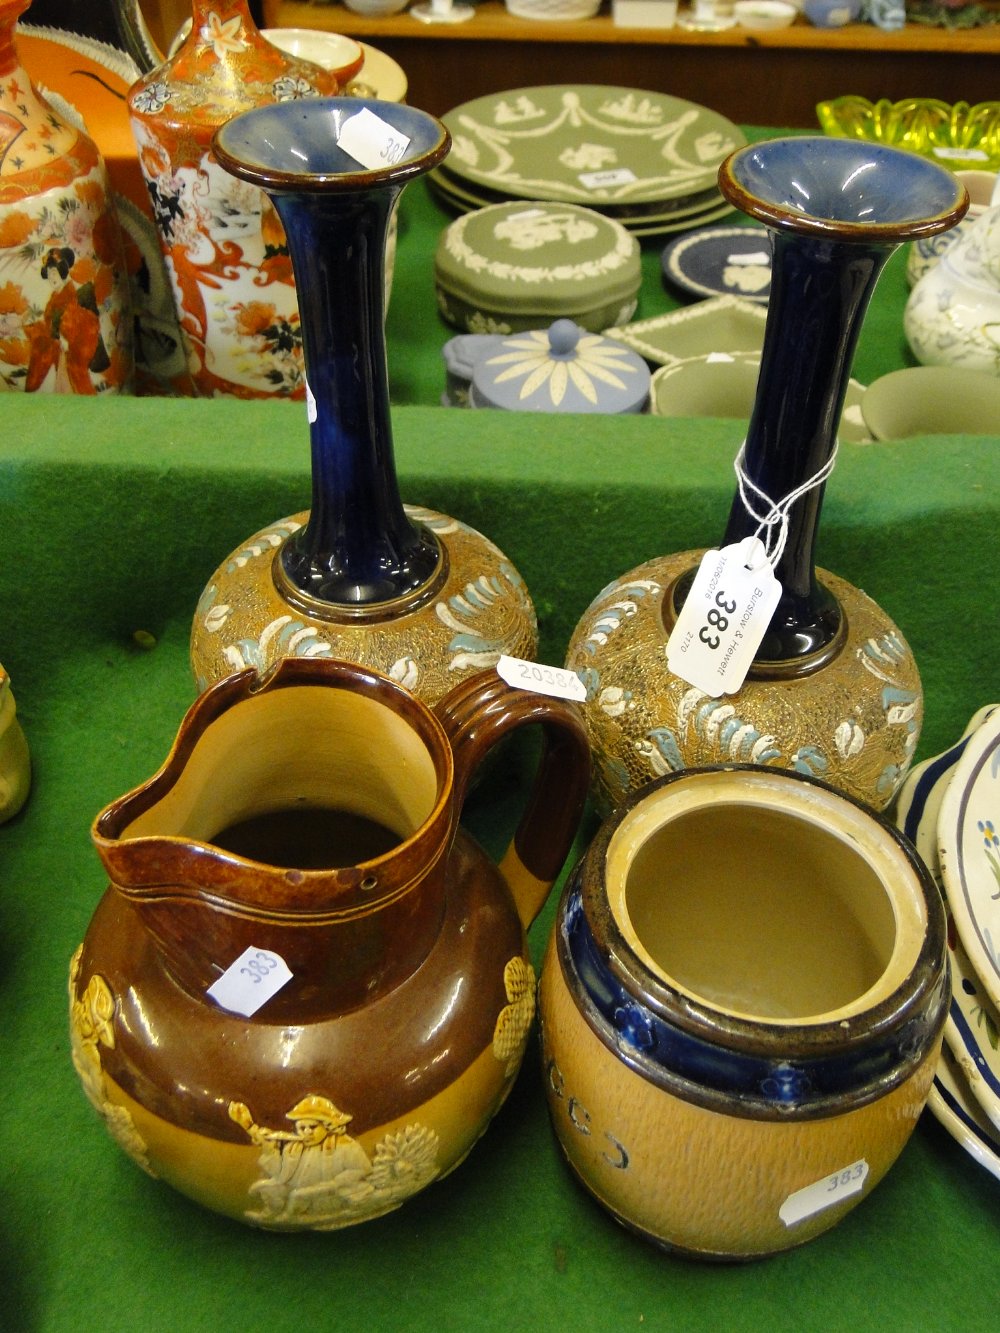 Pair of Royal Doulton long neck vases, a Doulton Harvest jug and tobacco jar.